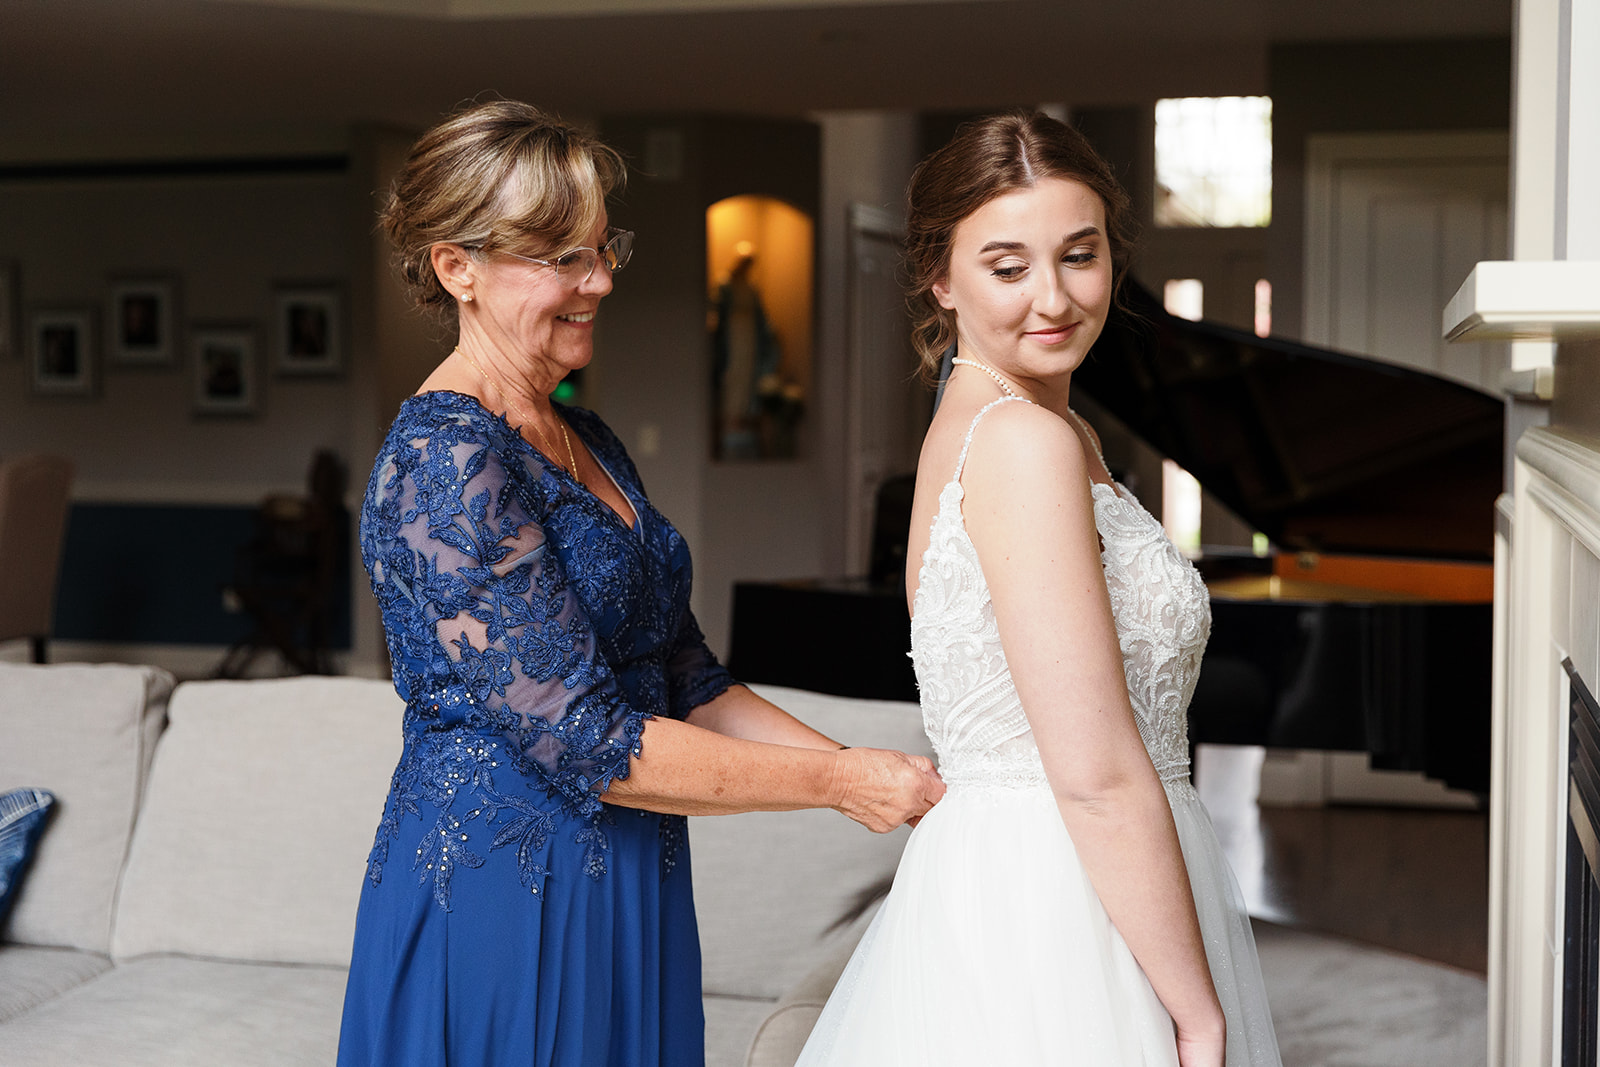 Kelly Reed and daughter bridget at wedding